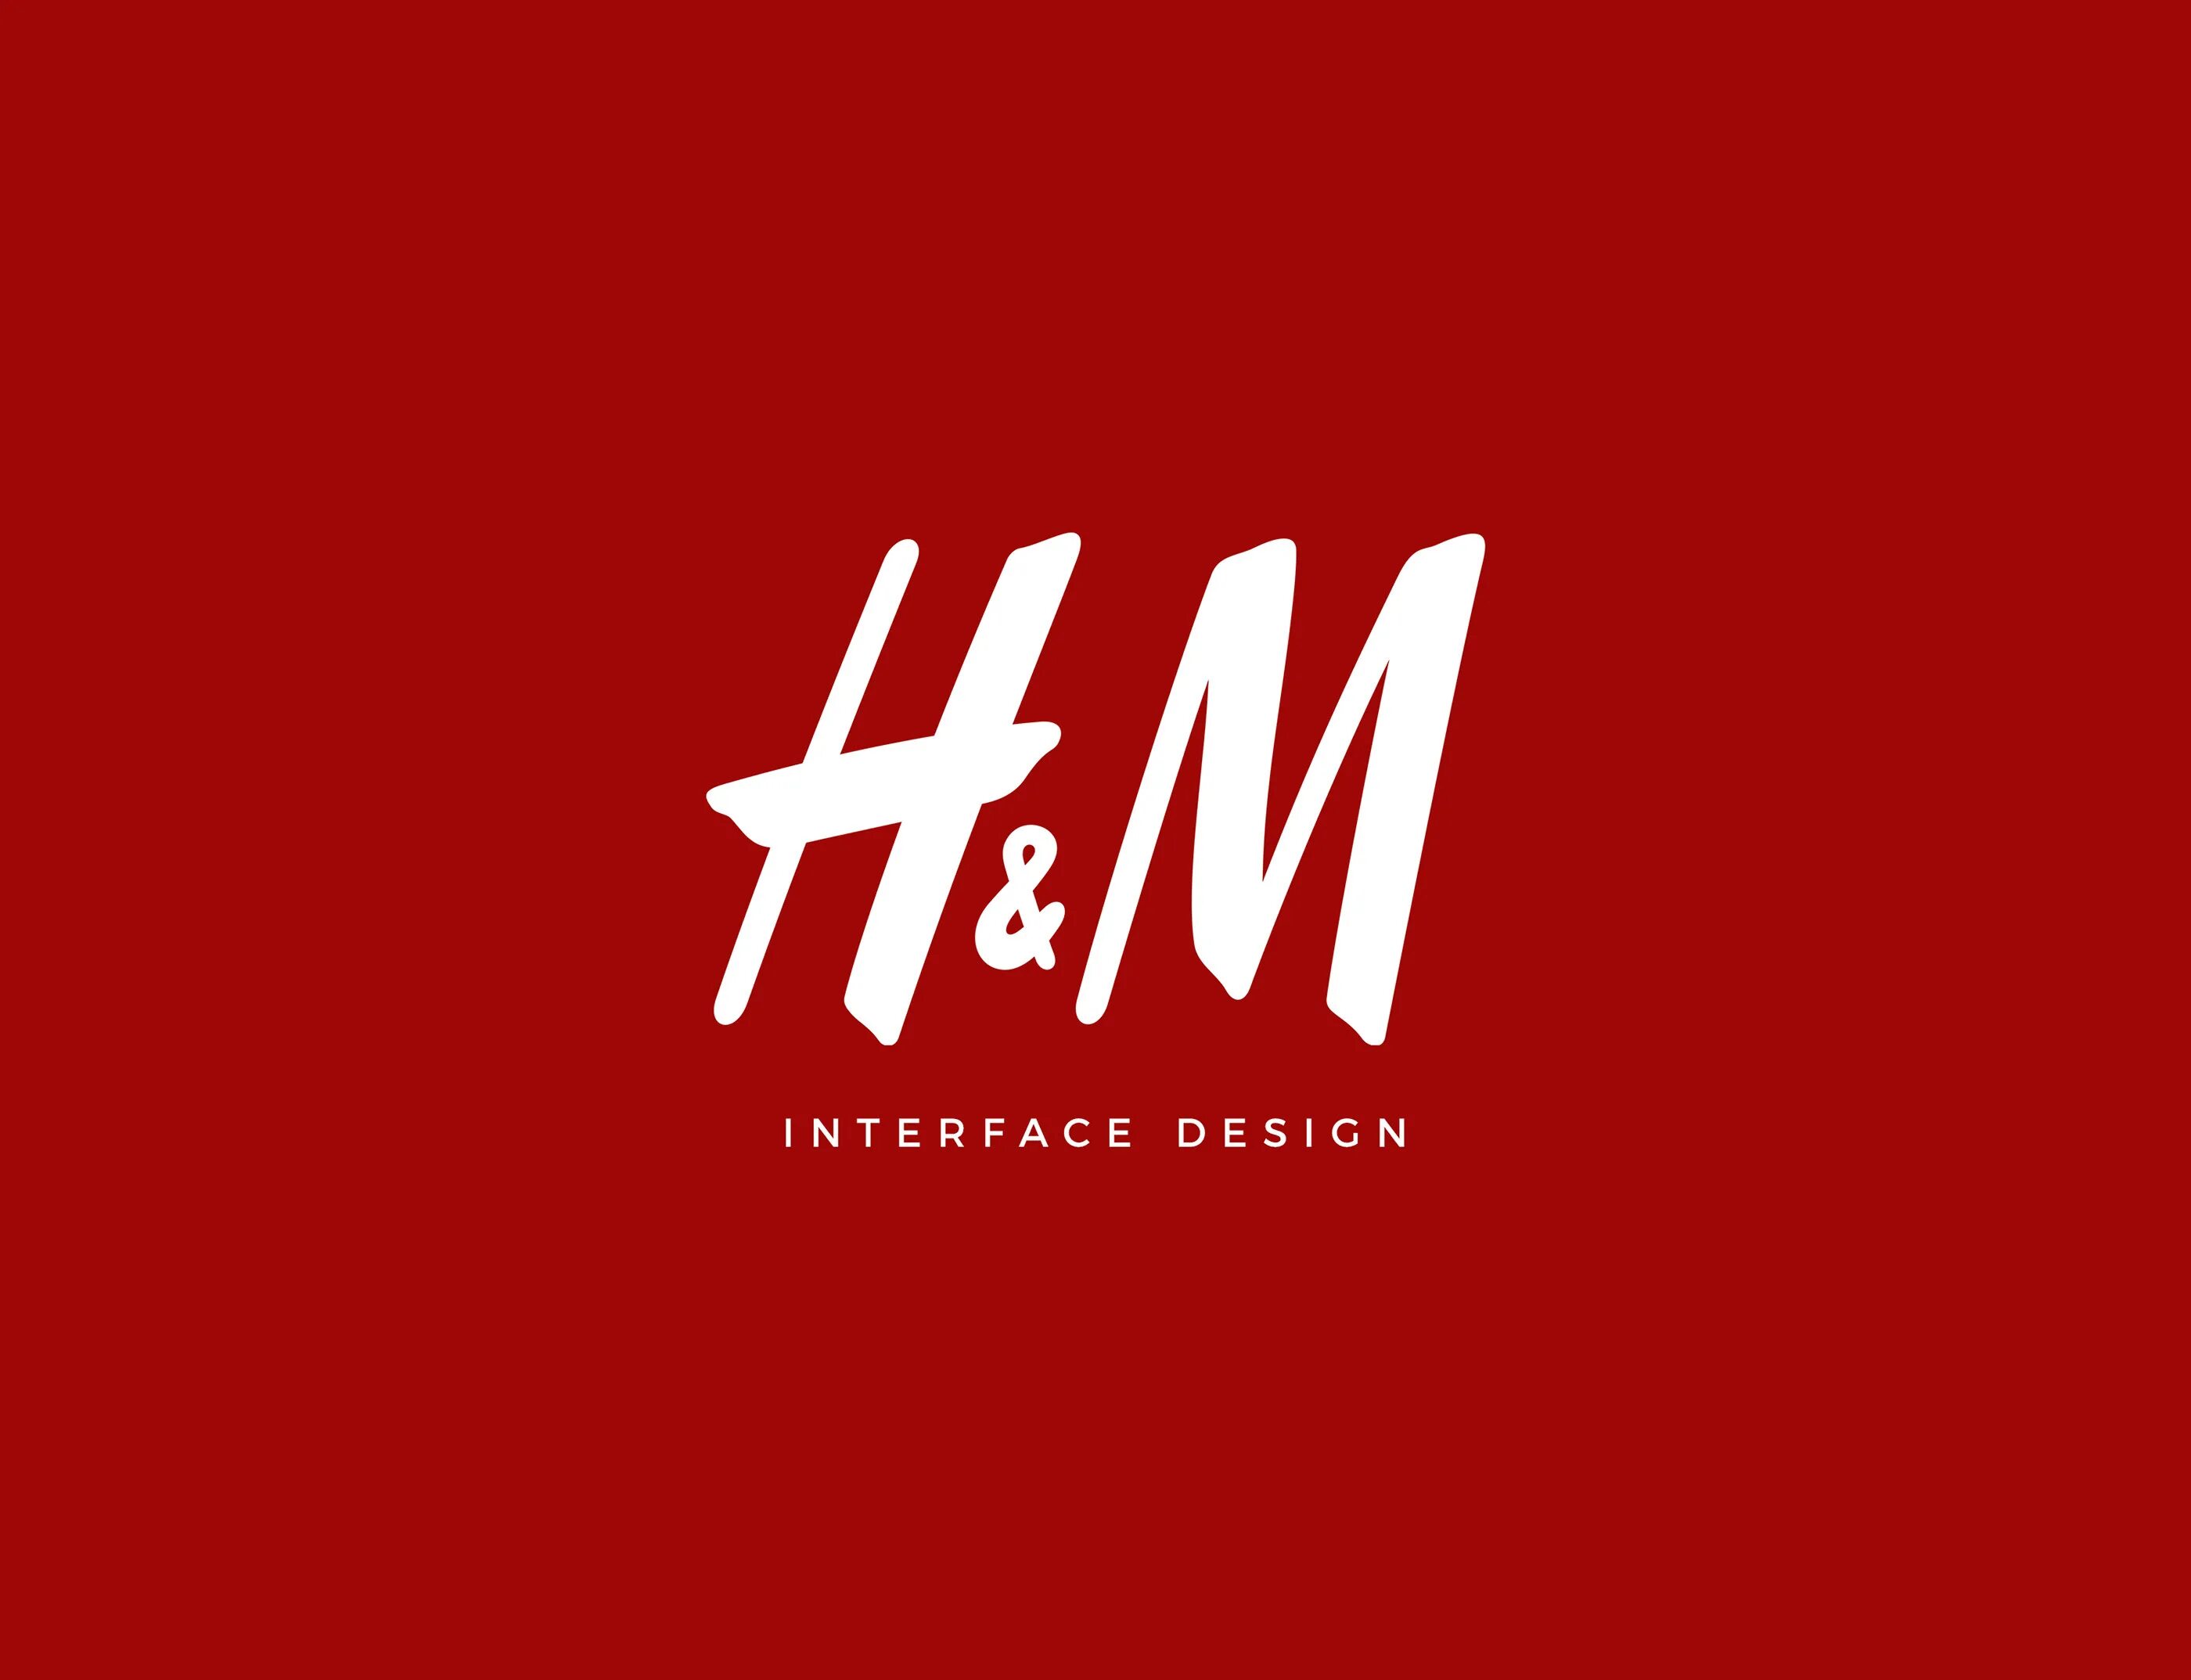 H m ch. НМ логотип. Бренд h m. Компания h m логотип. Логотип магазина одежды h&m.